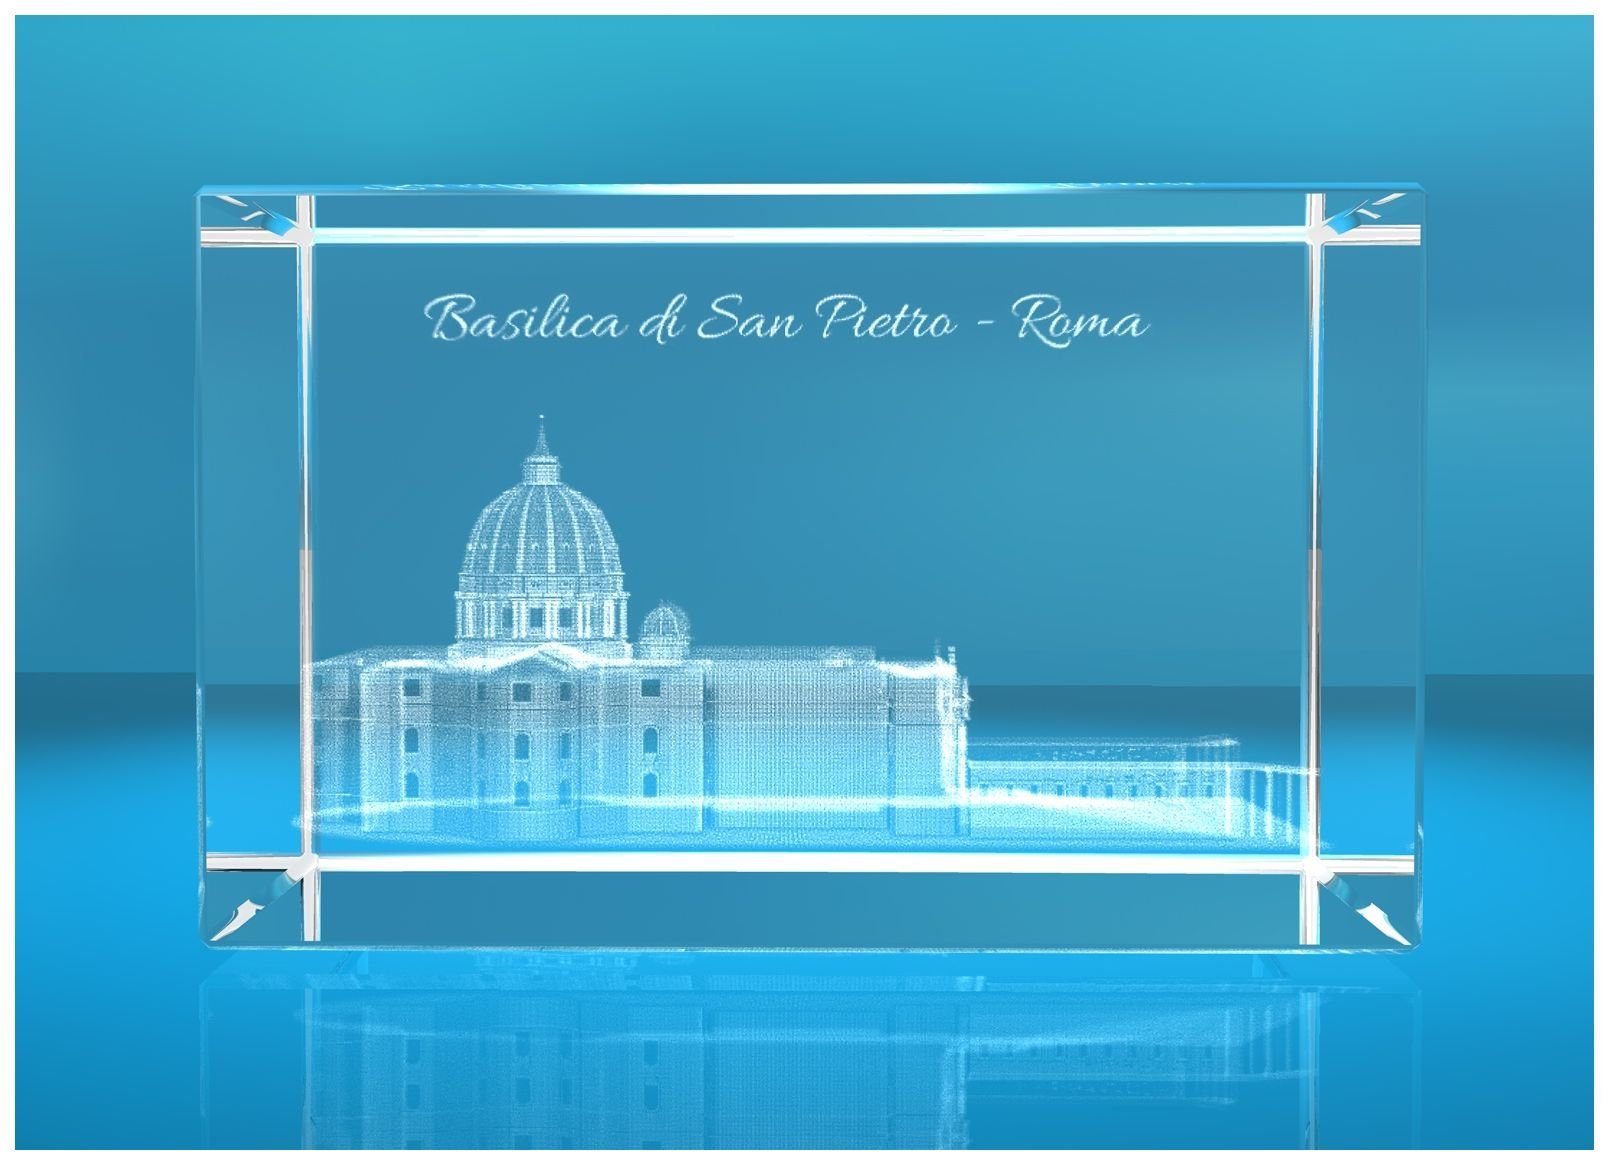 VIP-LASER Dekofigur 3D Glasquader Motiv: Basilica di San Pietro Roma / Petersdom Rom, Hochwertige Geschenkbox, Made in Germany, Familienbetrieb